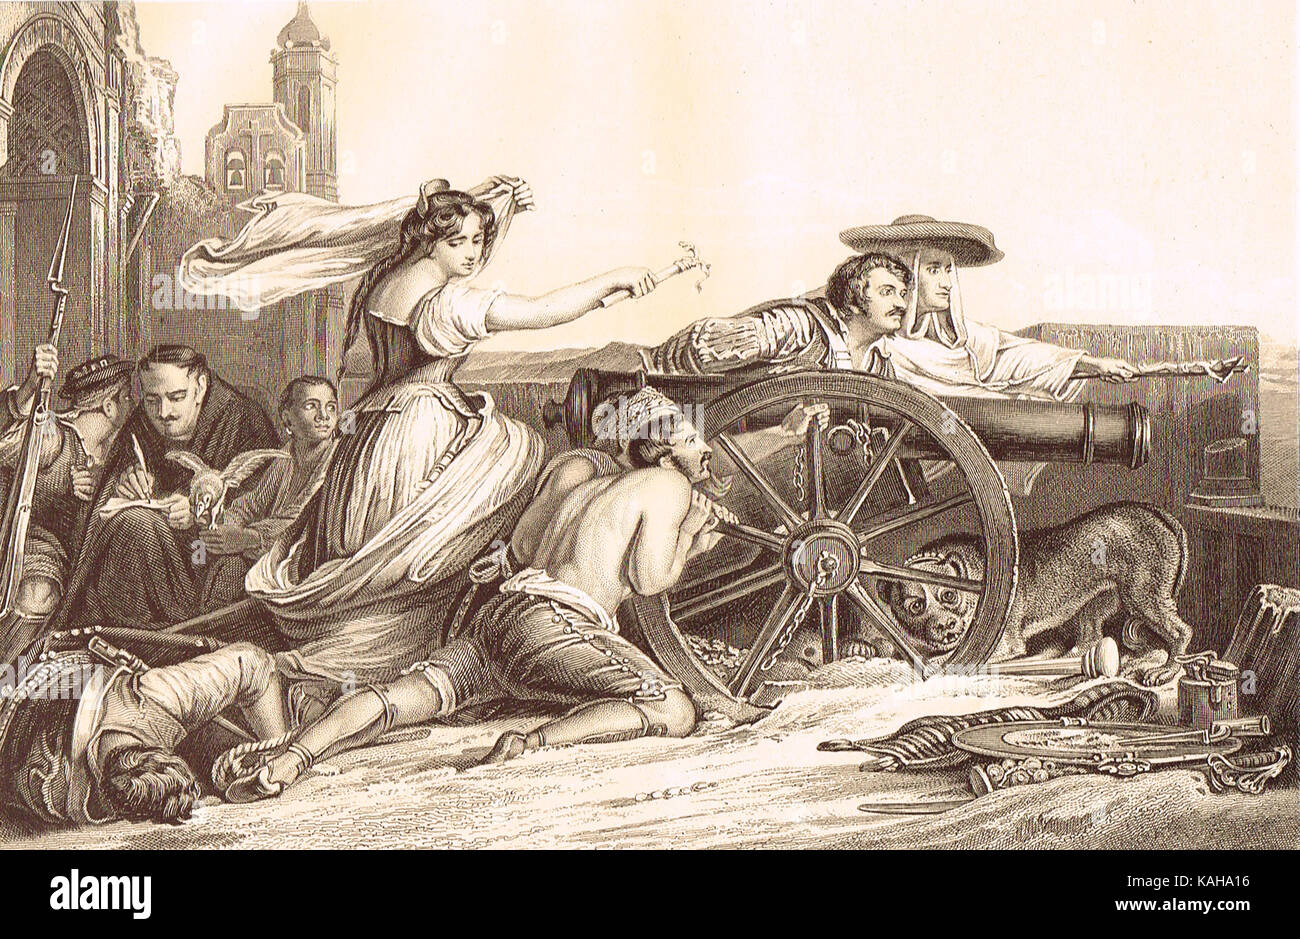 The maid of Saragossa, Siege of Zaragoza, Spain, 1808 Stock Photo